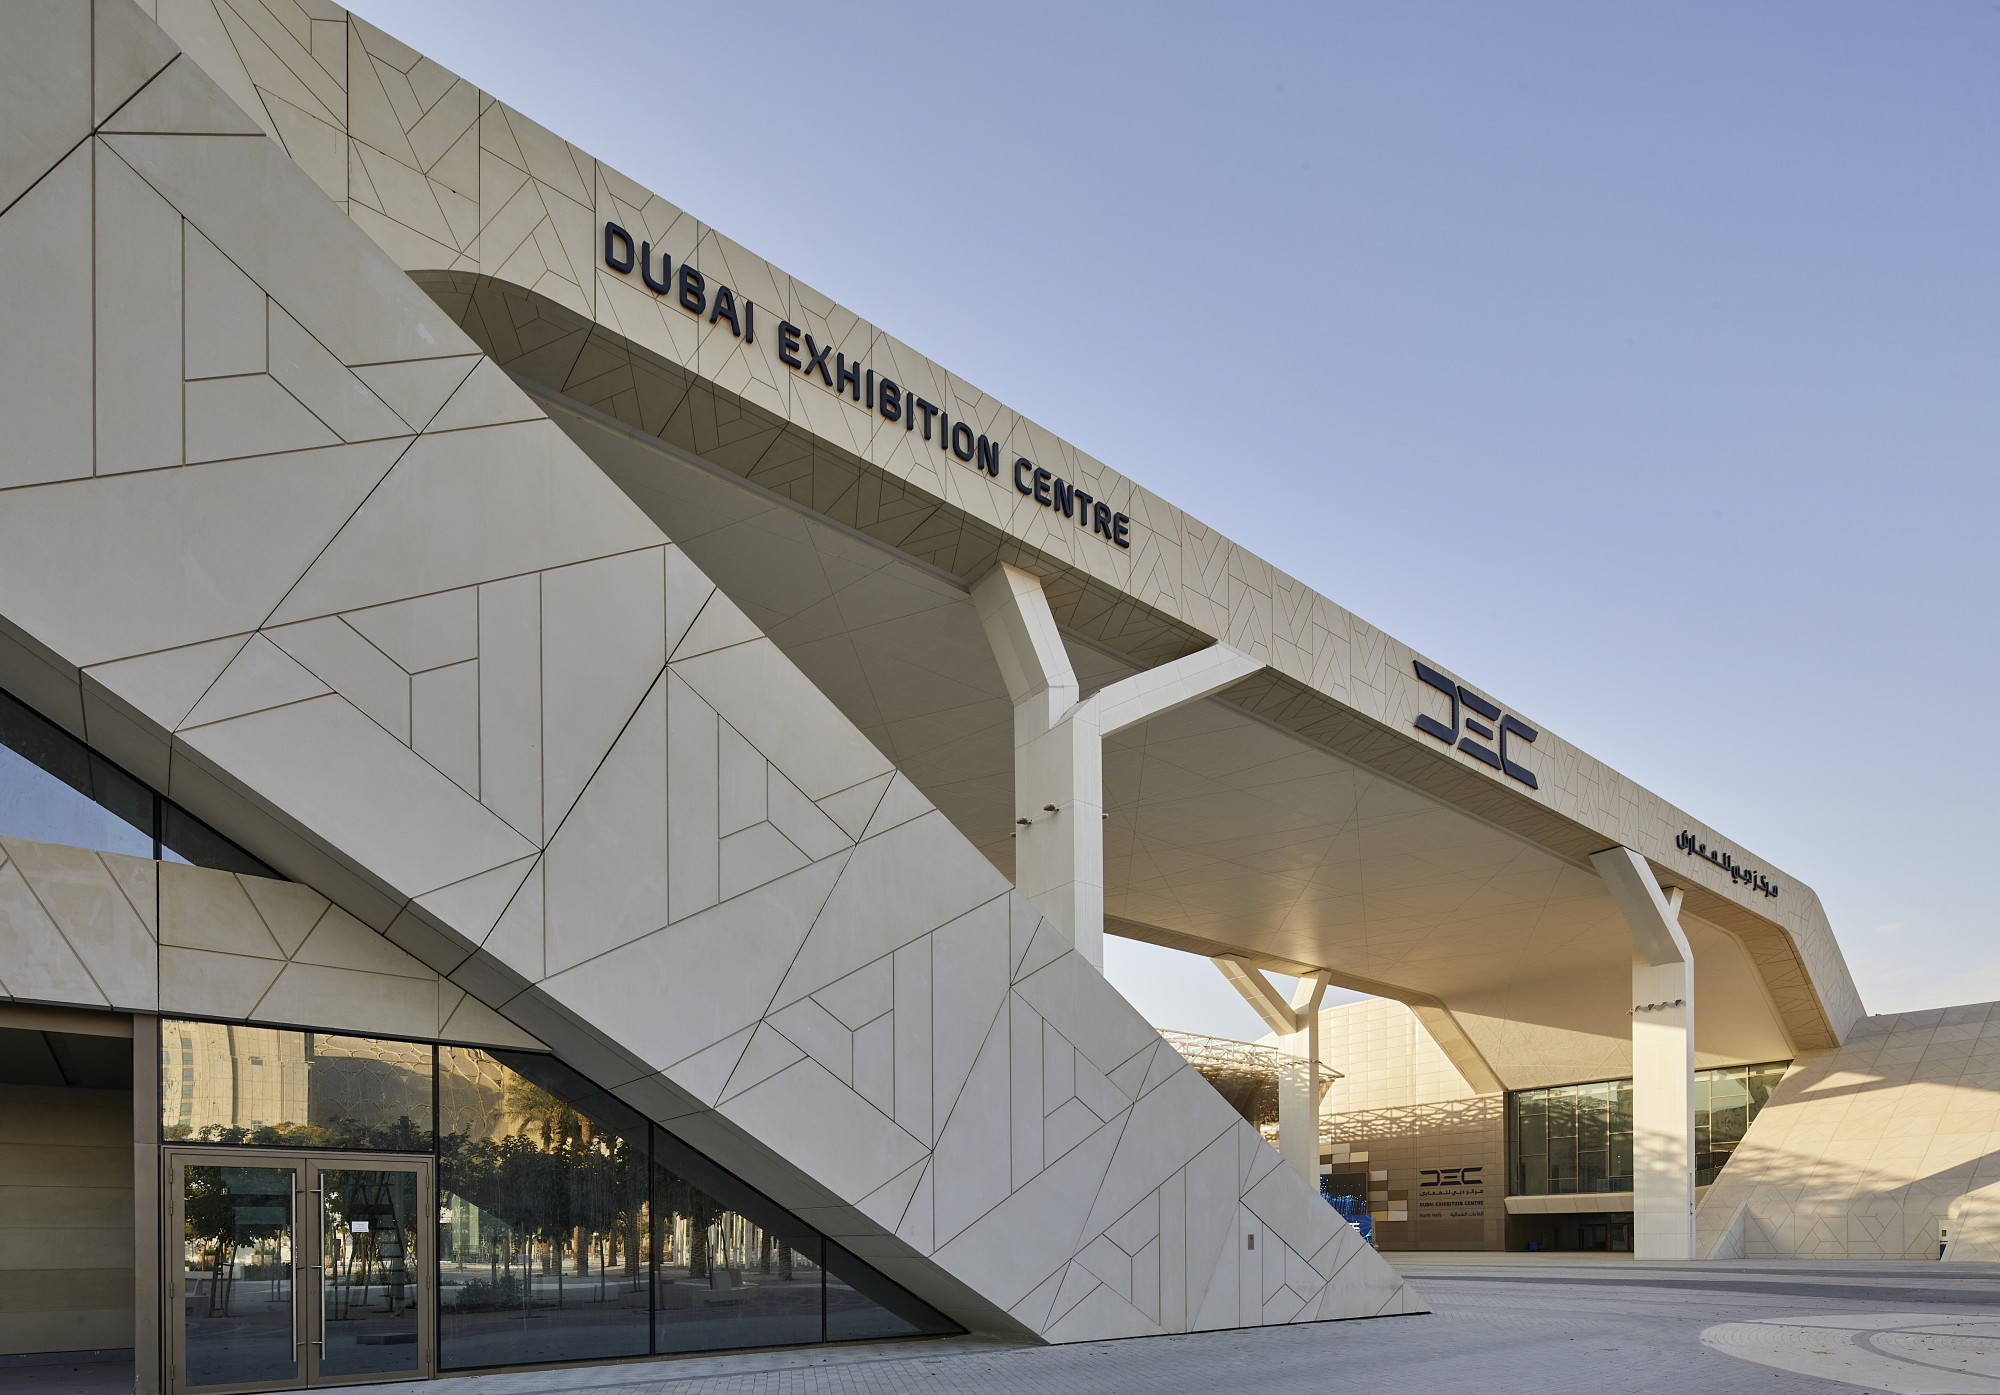 Dubai Exhibition centre 2